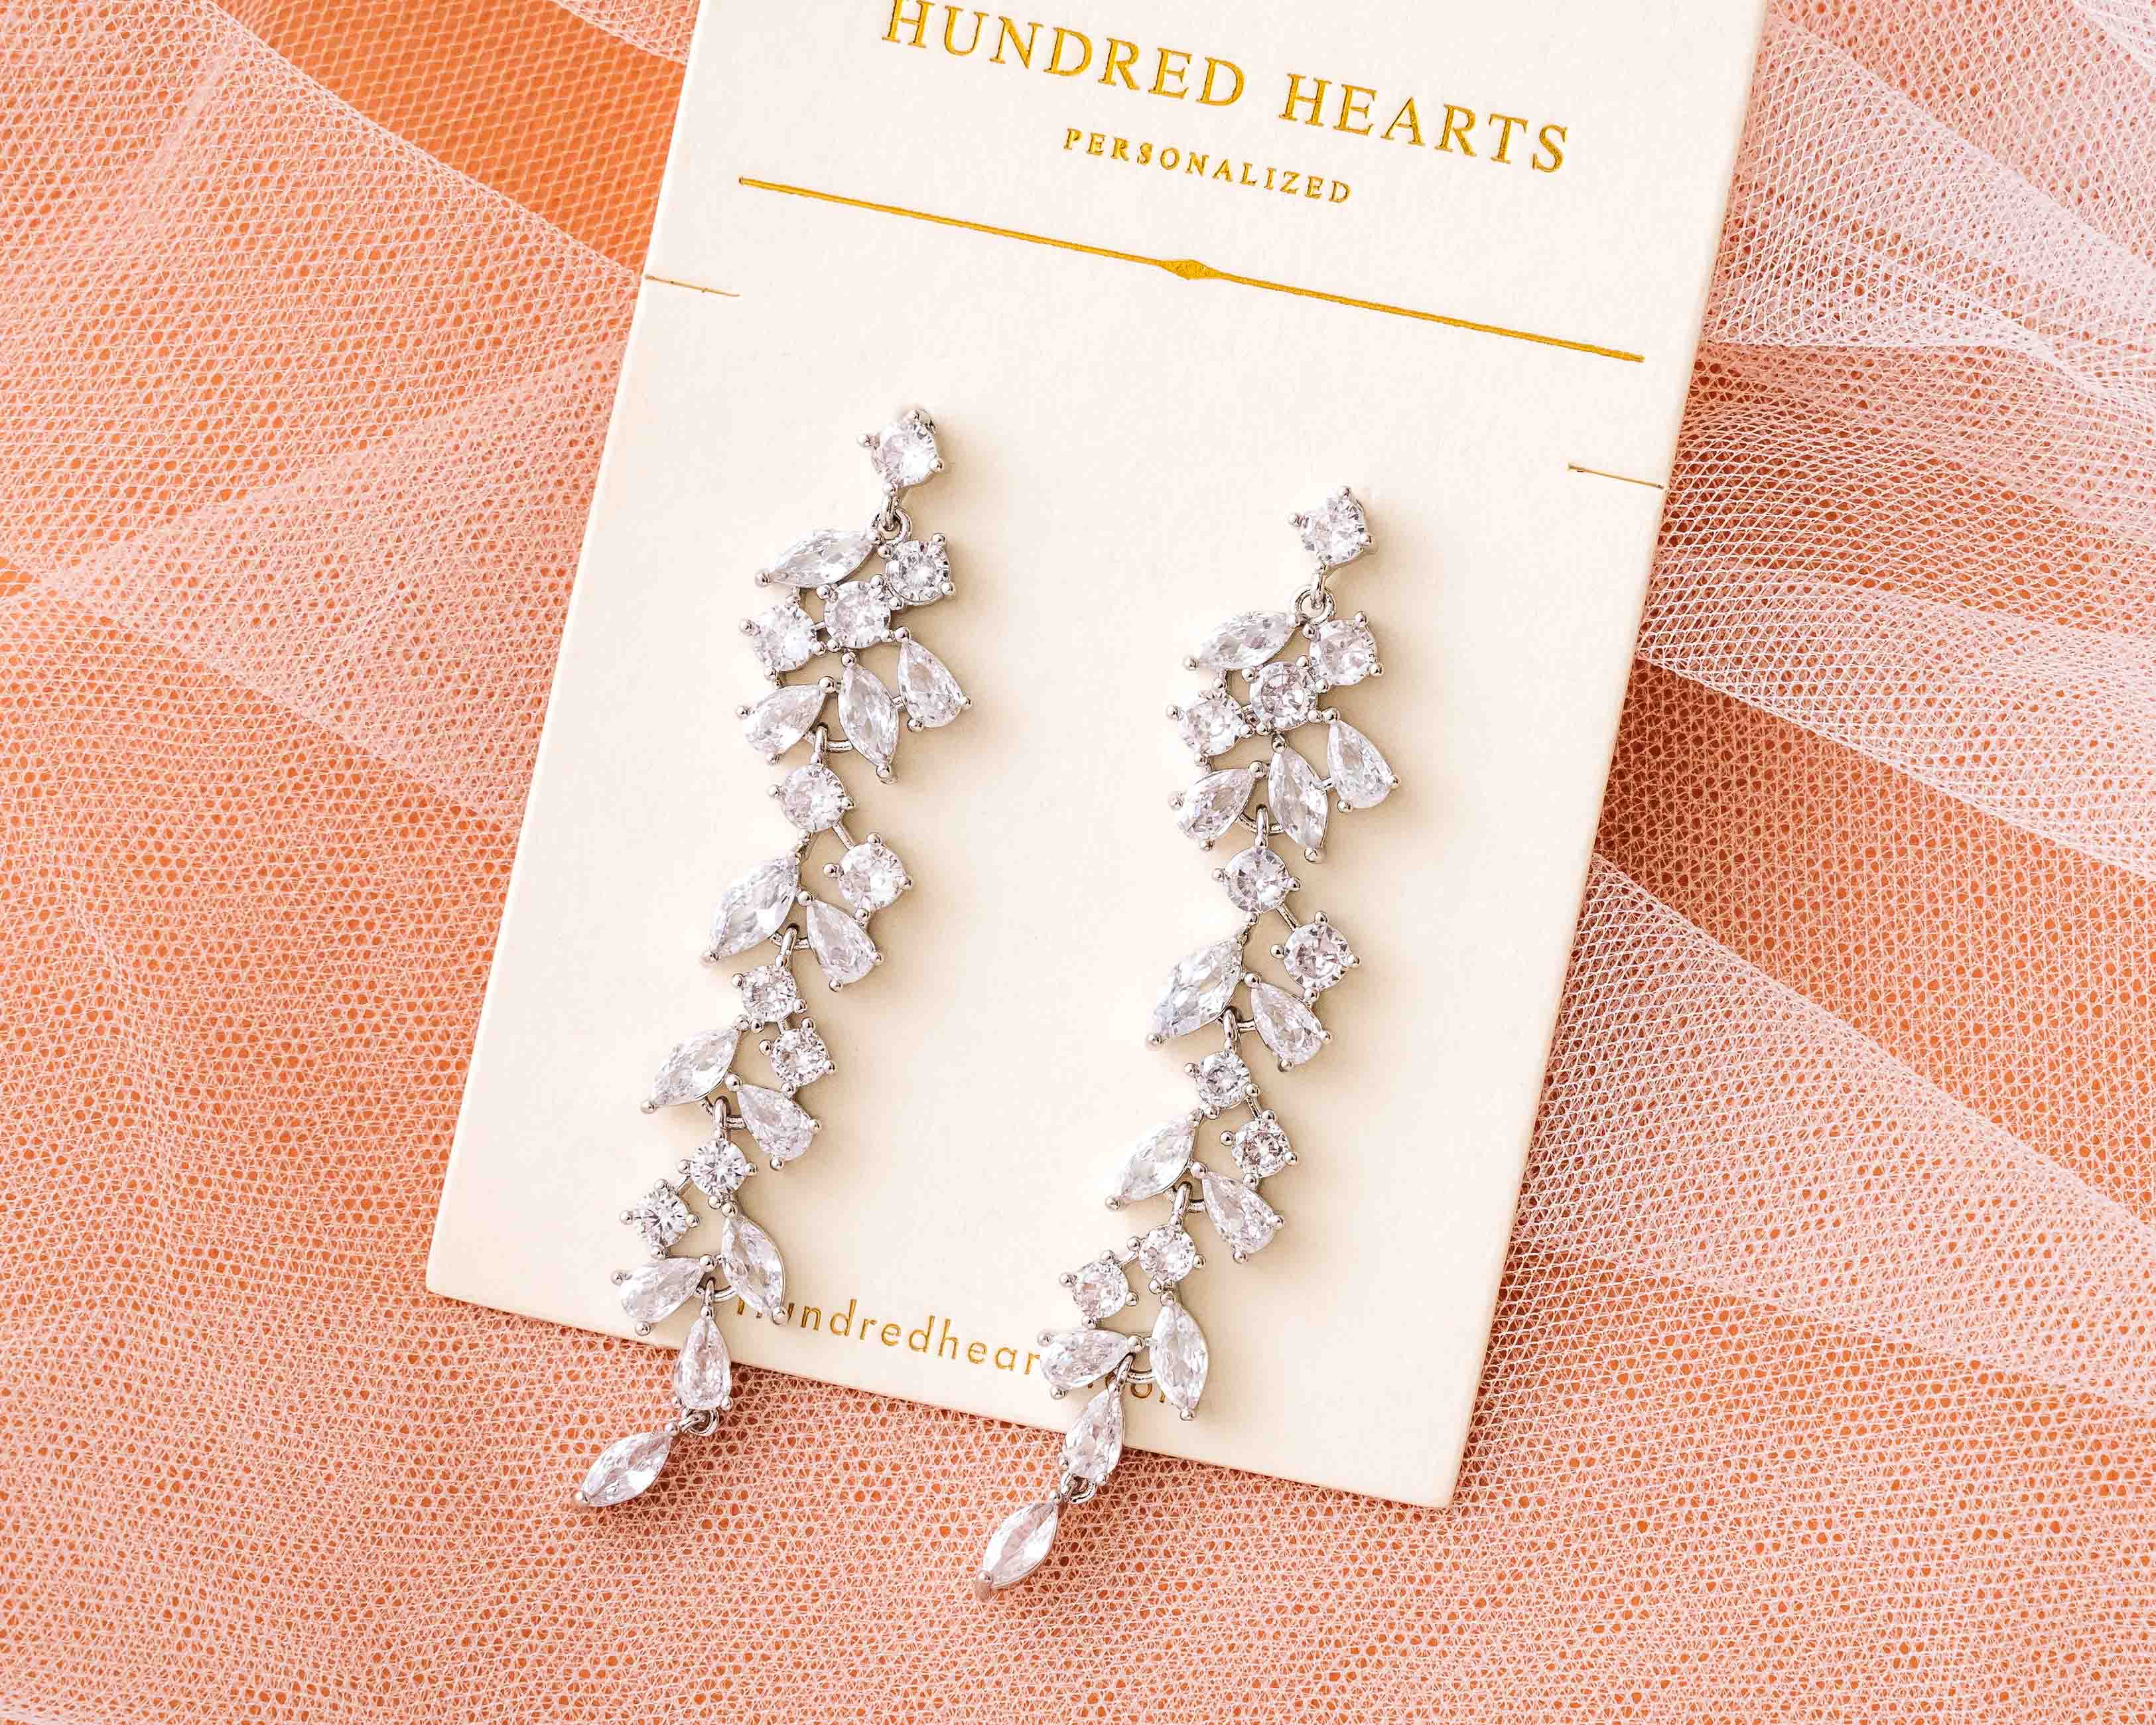 Silver Crystal Dangle Earrings - The perfect wedding earrings.